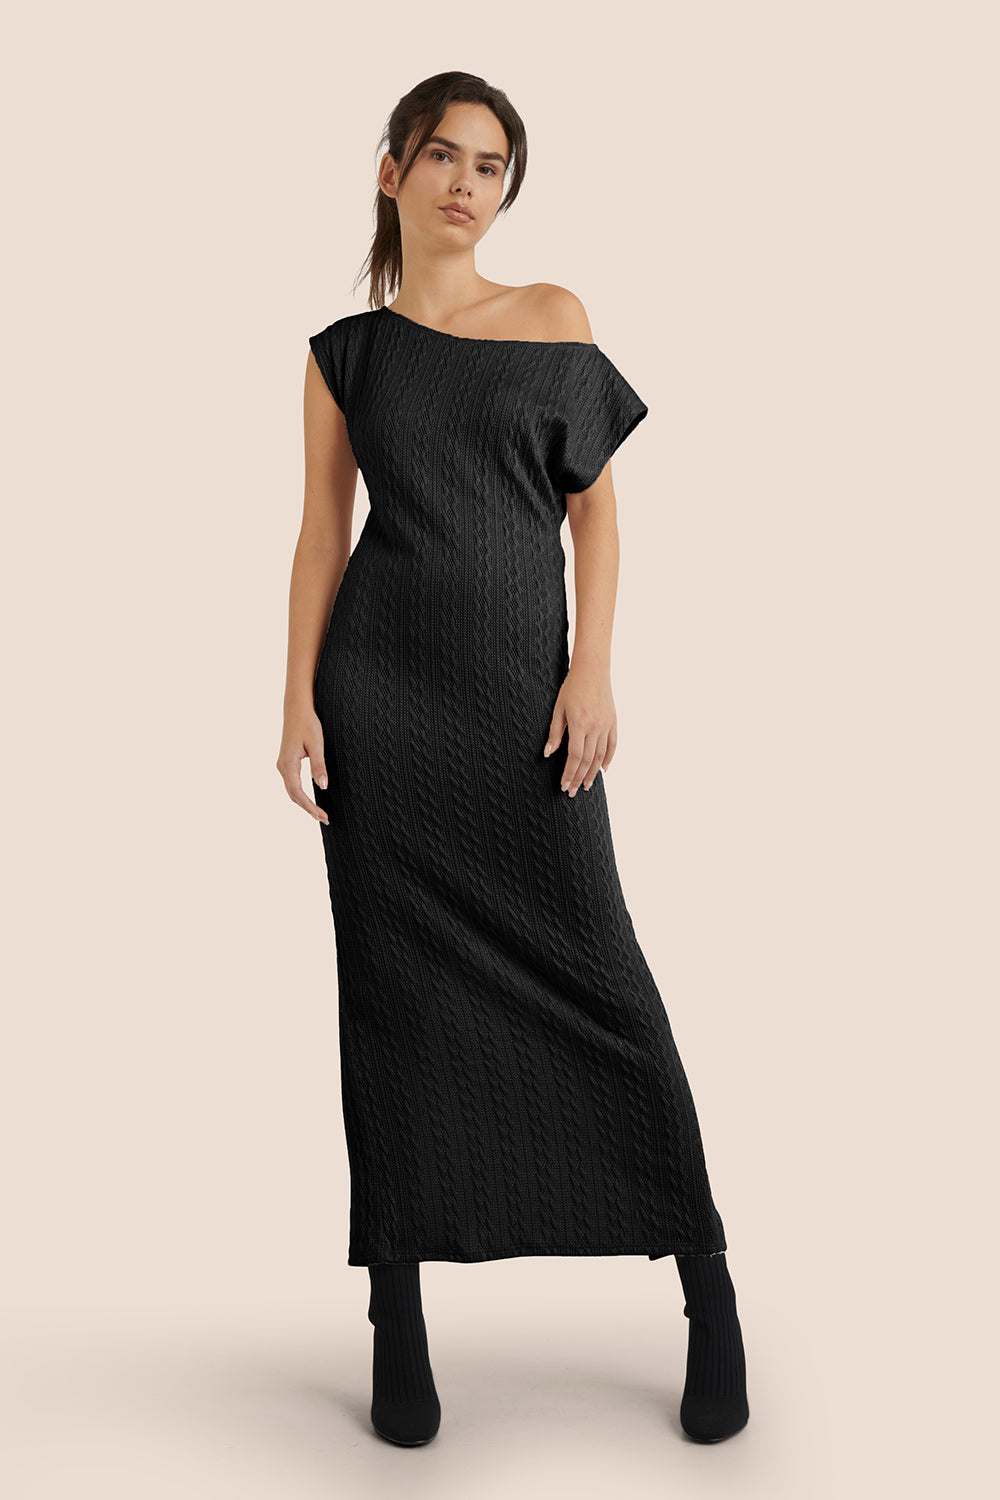 Selana Beige | Knit Maxi Dress w/ Back Slit